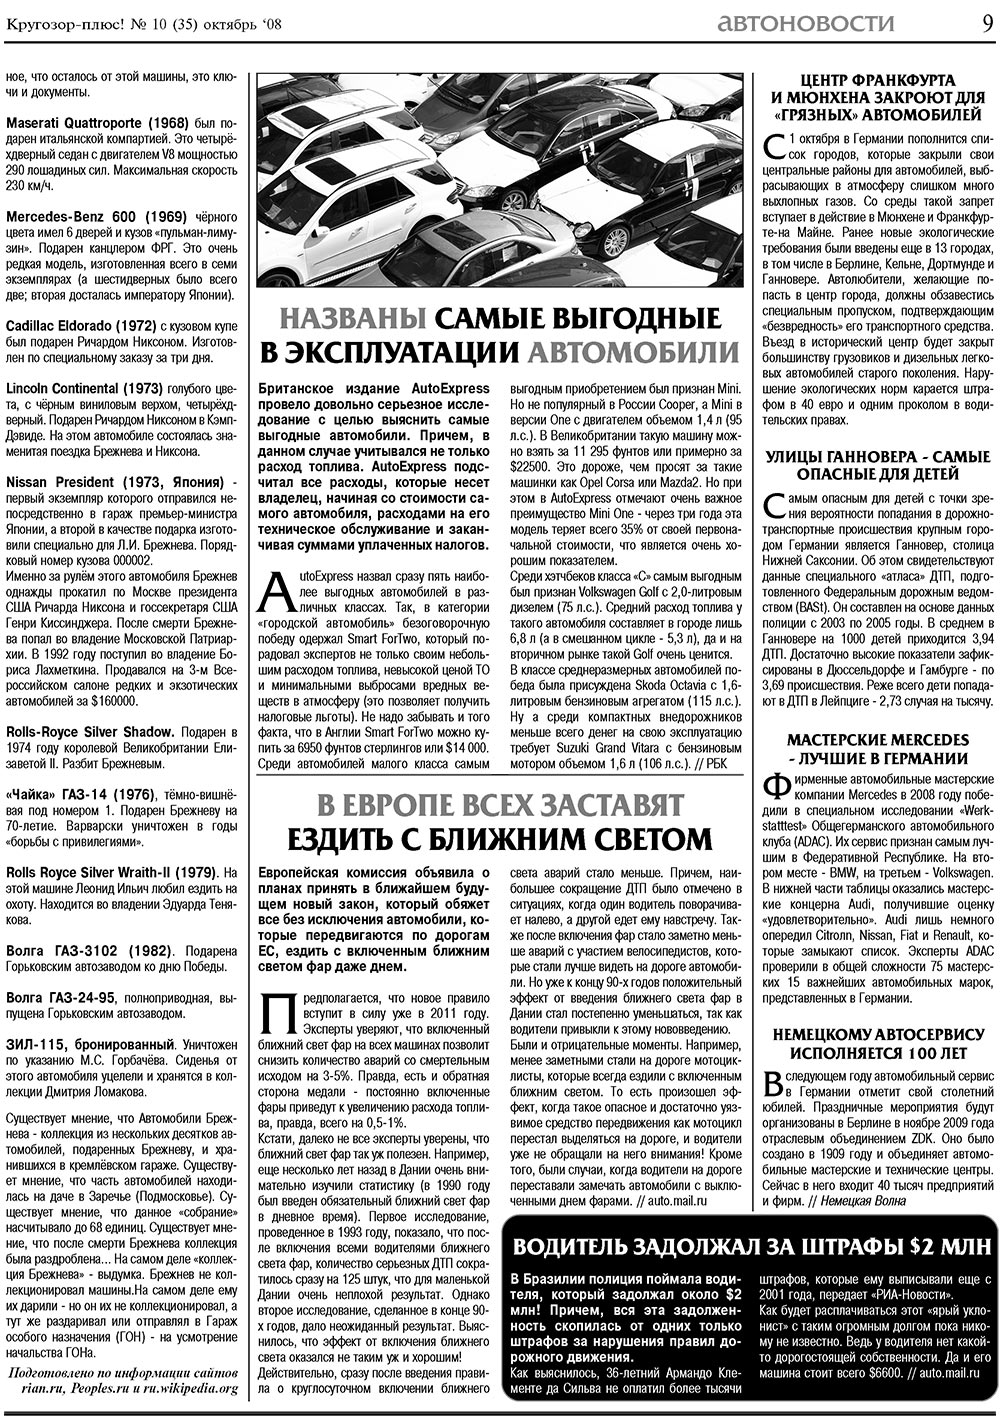 Кругозор плюс! (газета). 2008 год, номер 10, стр. 9